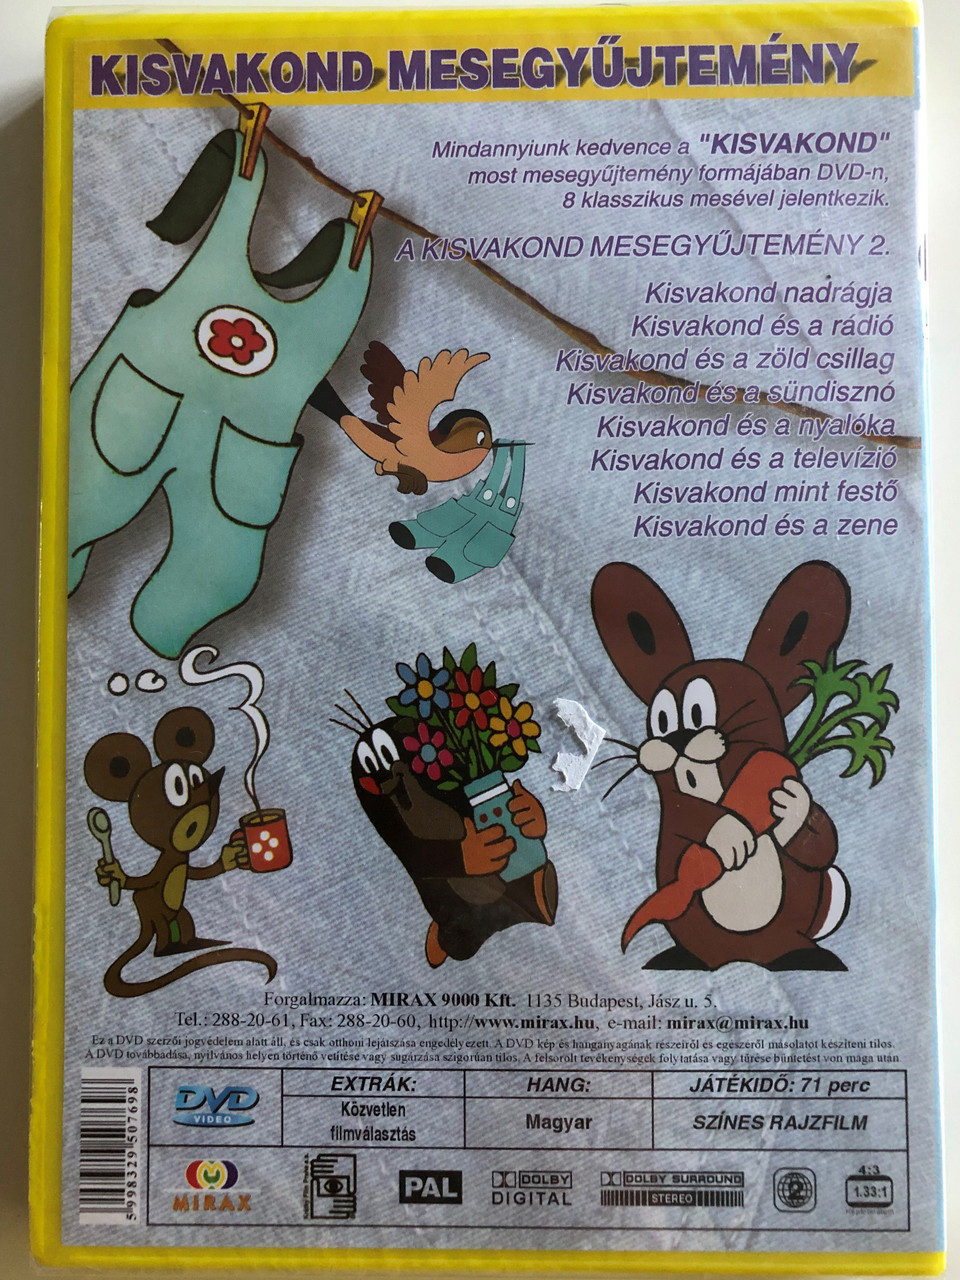 Krtek's Pants (Little Mole) Series 2. DVD 2000 A Kisvakond nadrágja -  Kisvakond mesegyűjtemény 2. / 8 episodes on disc / Classic Czech Cartoon /  Created by Zdeněk Miler - Bible in My Language